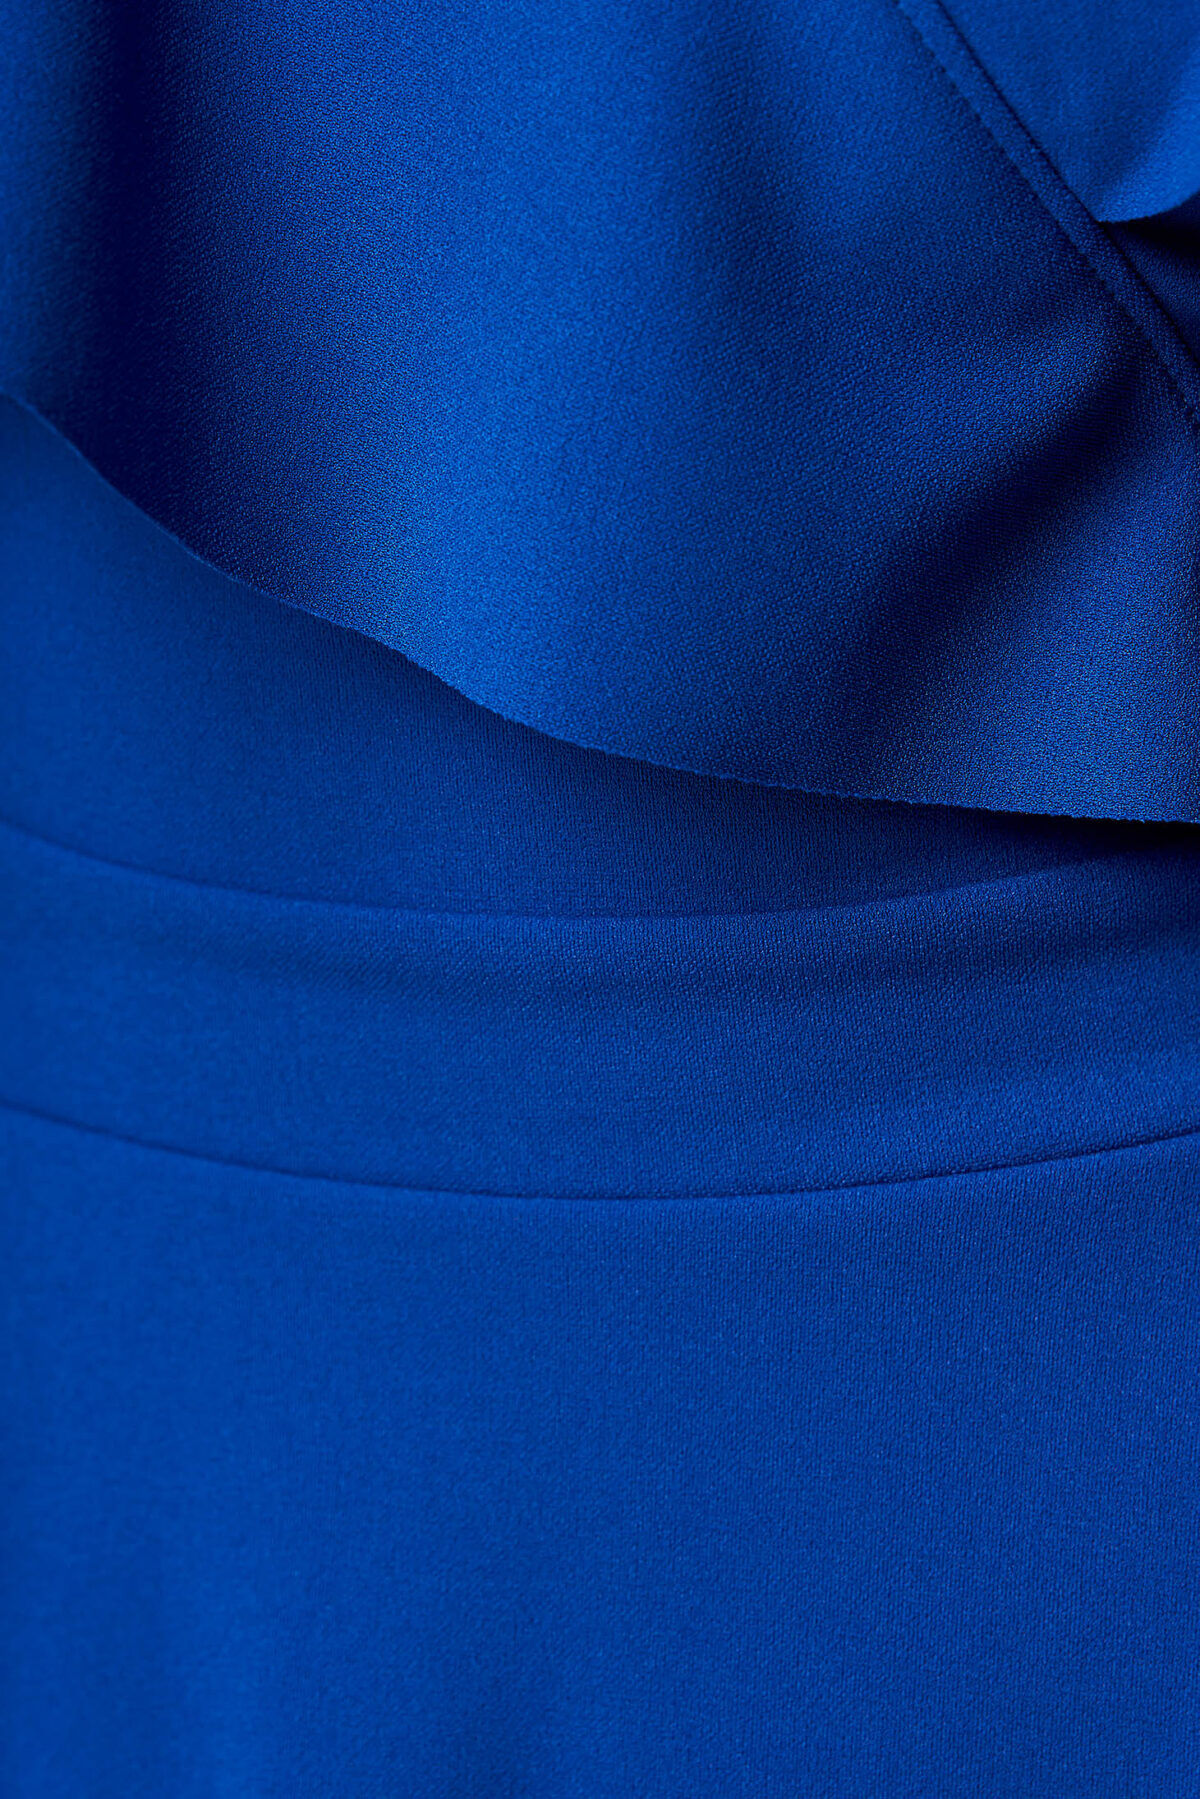 Blue Dress Short Cut Cloche Frilly Trim Around Cleavage Line